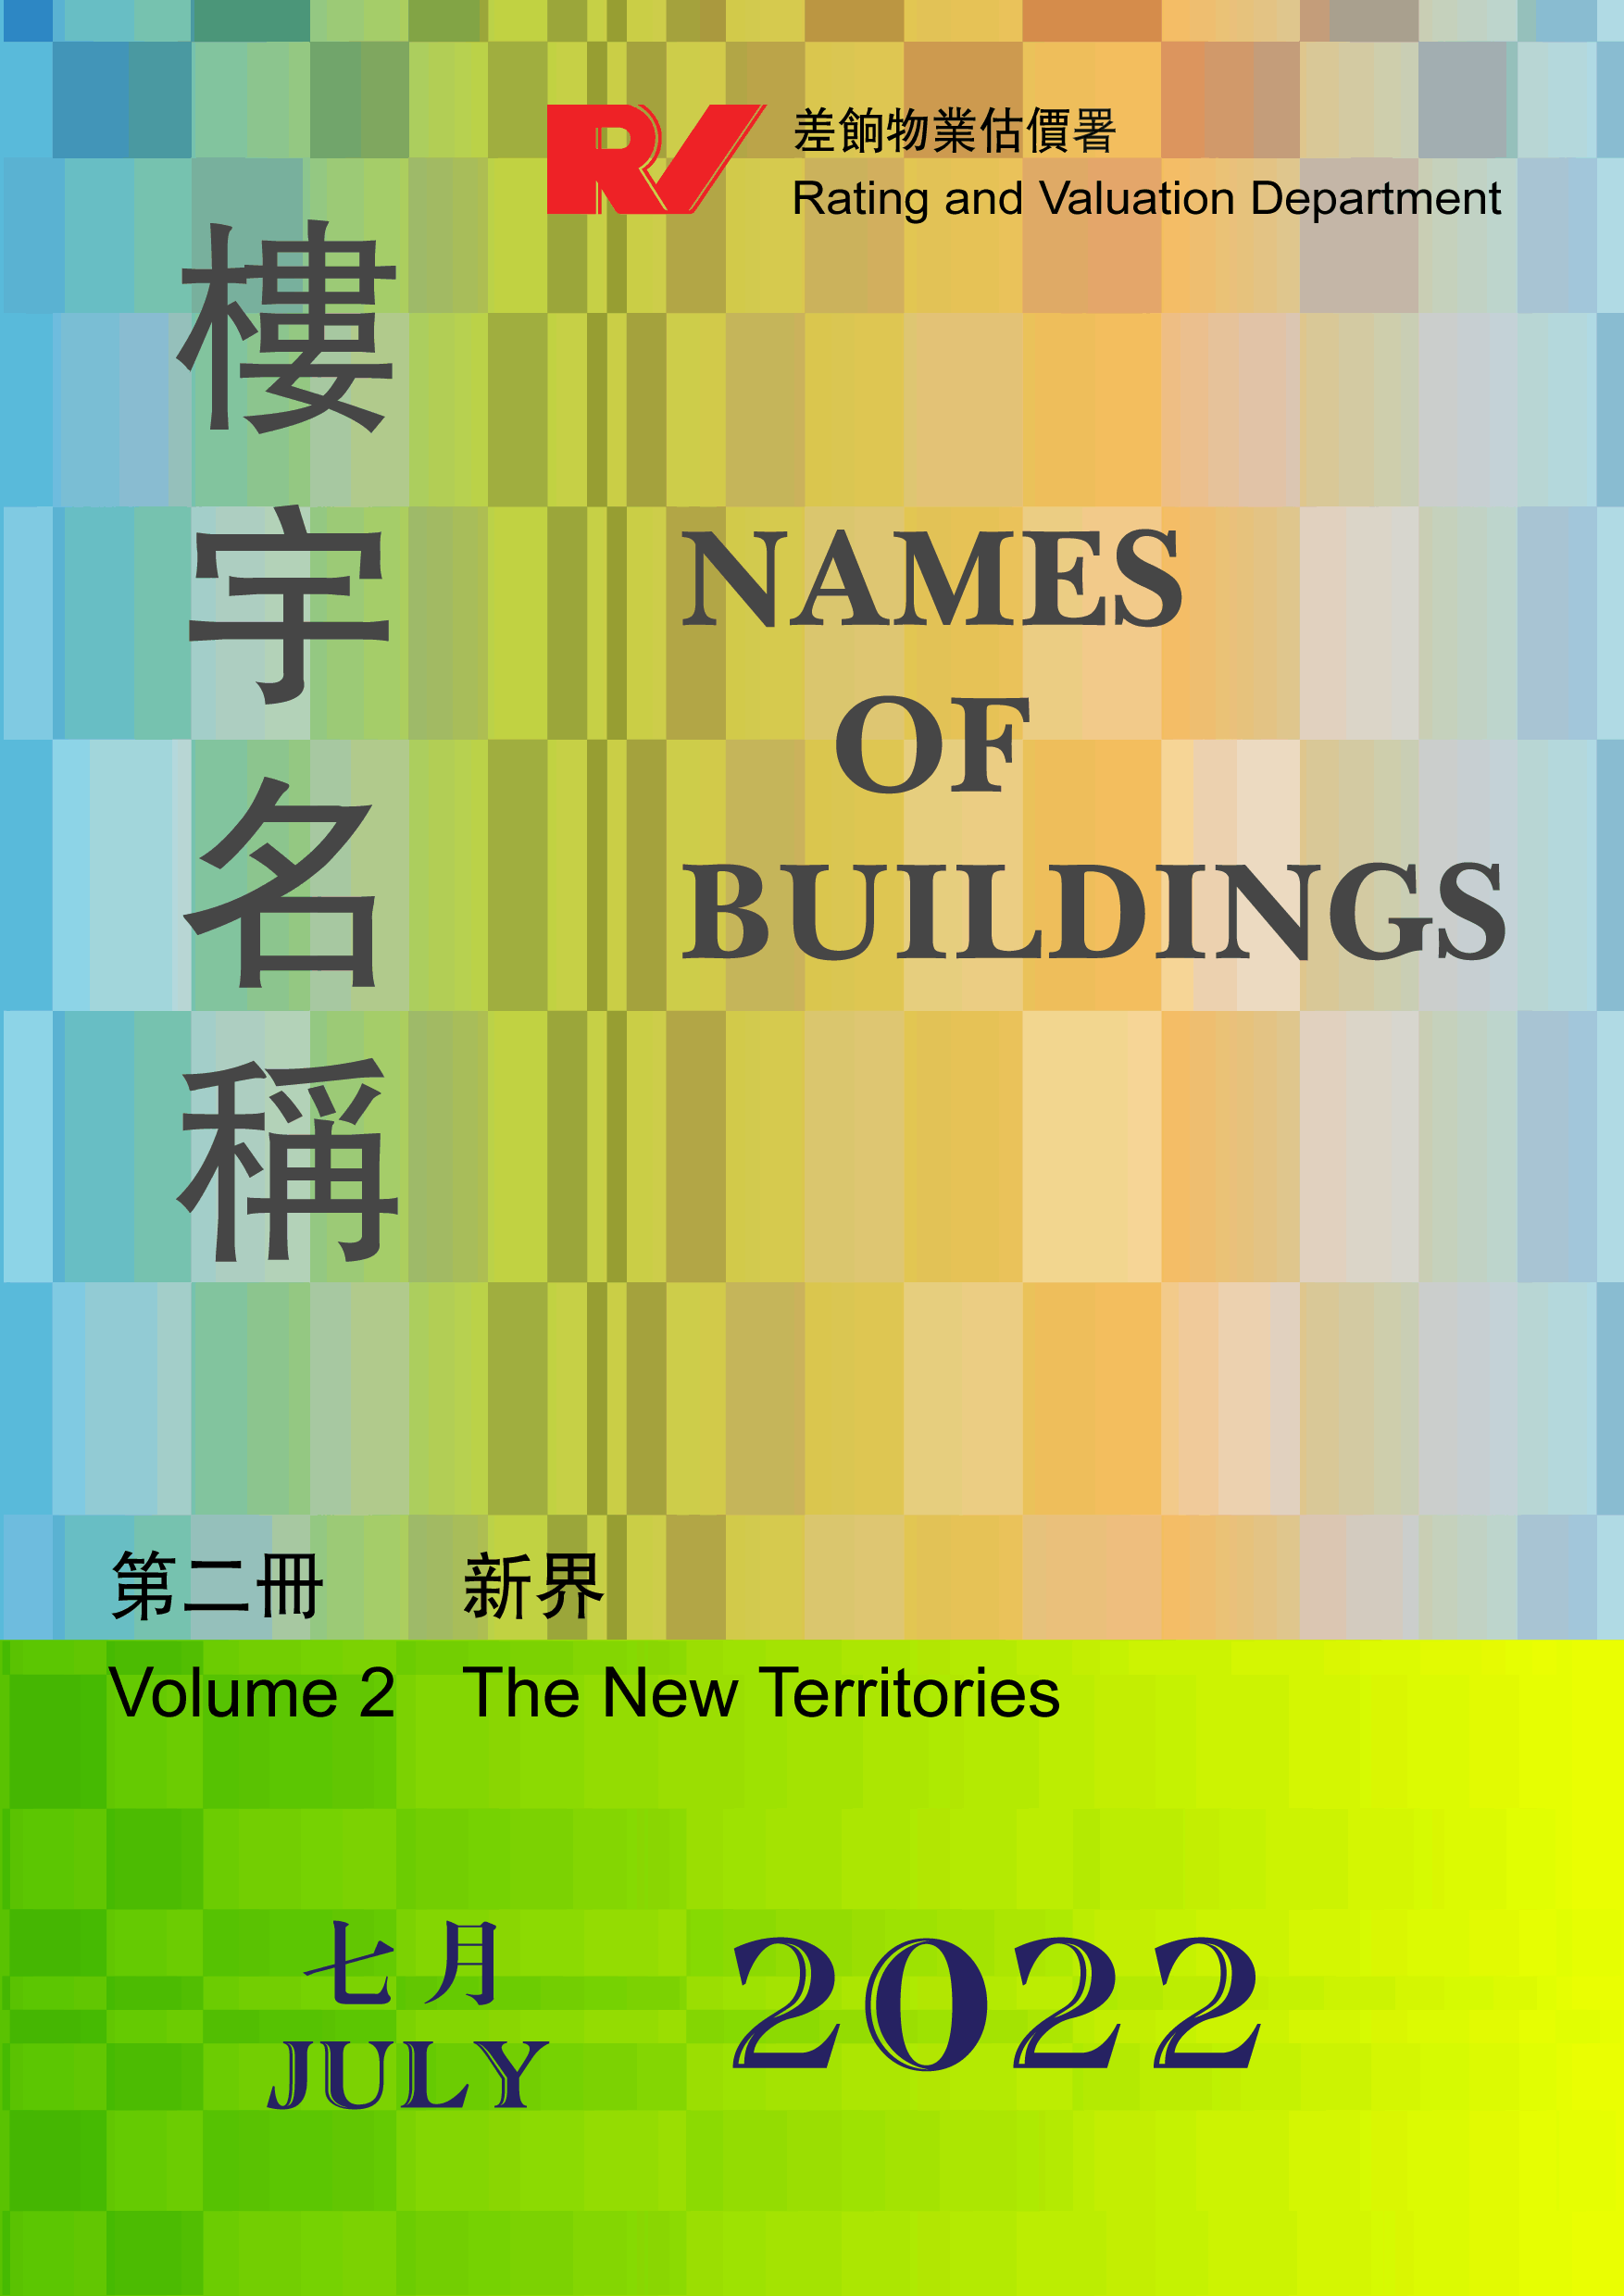 樓宇名稱第二冊新界Names of Buildings Volume Two The New Territories